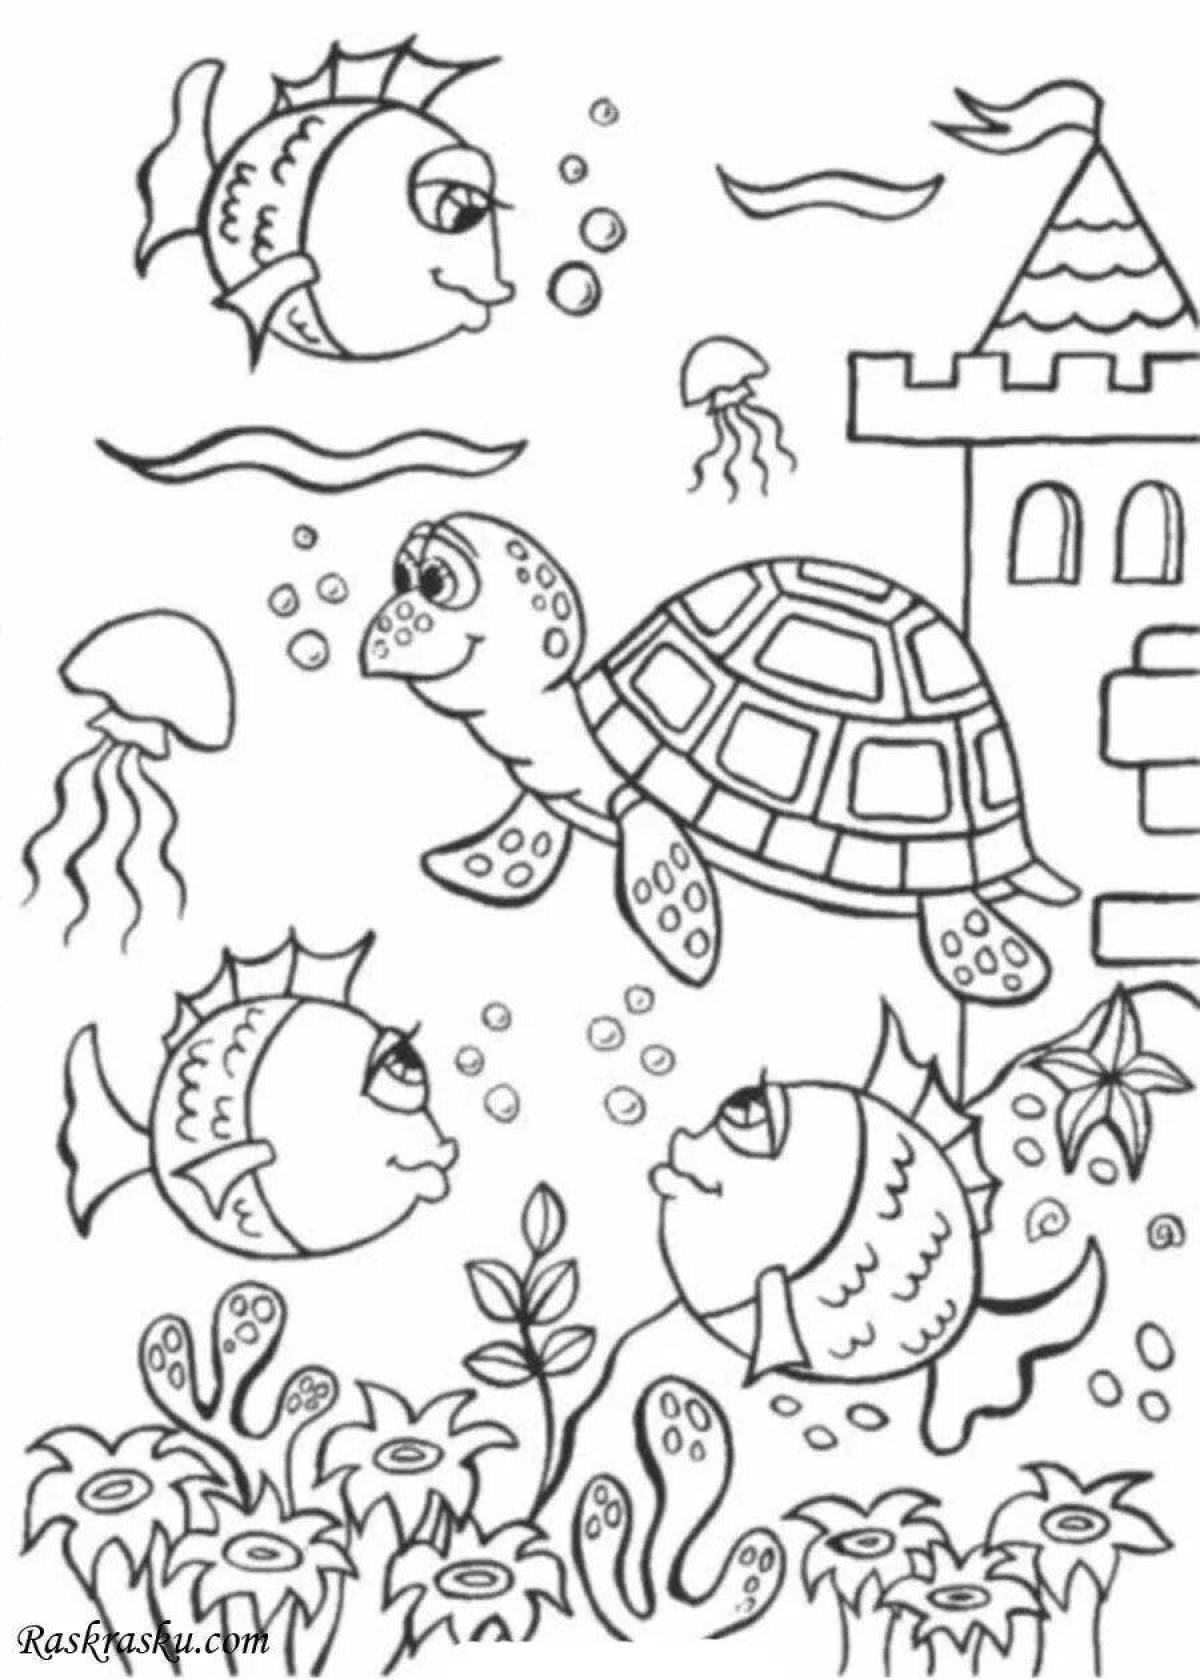 Serene aquatic life coloring page